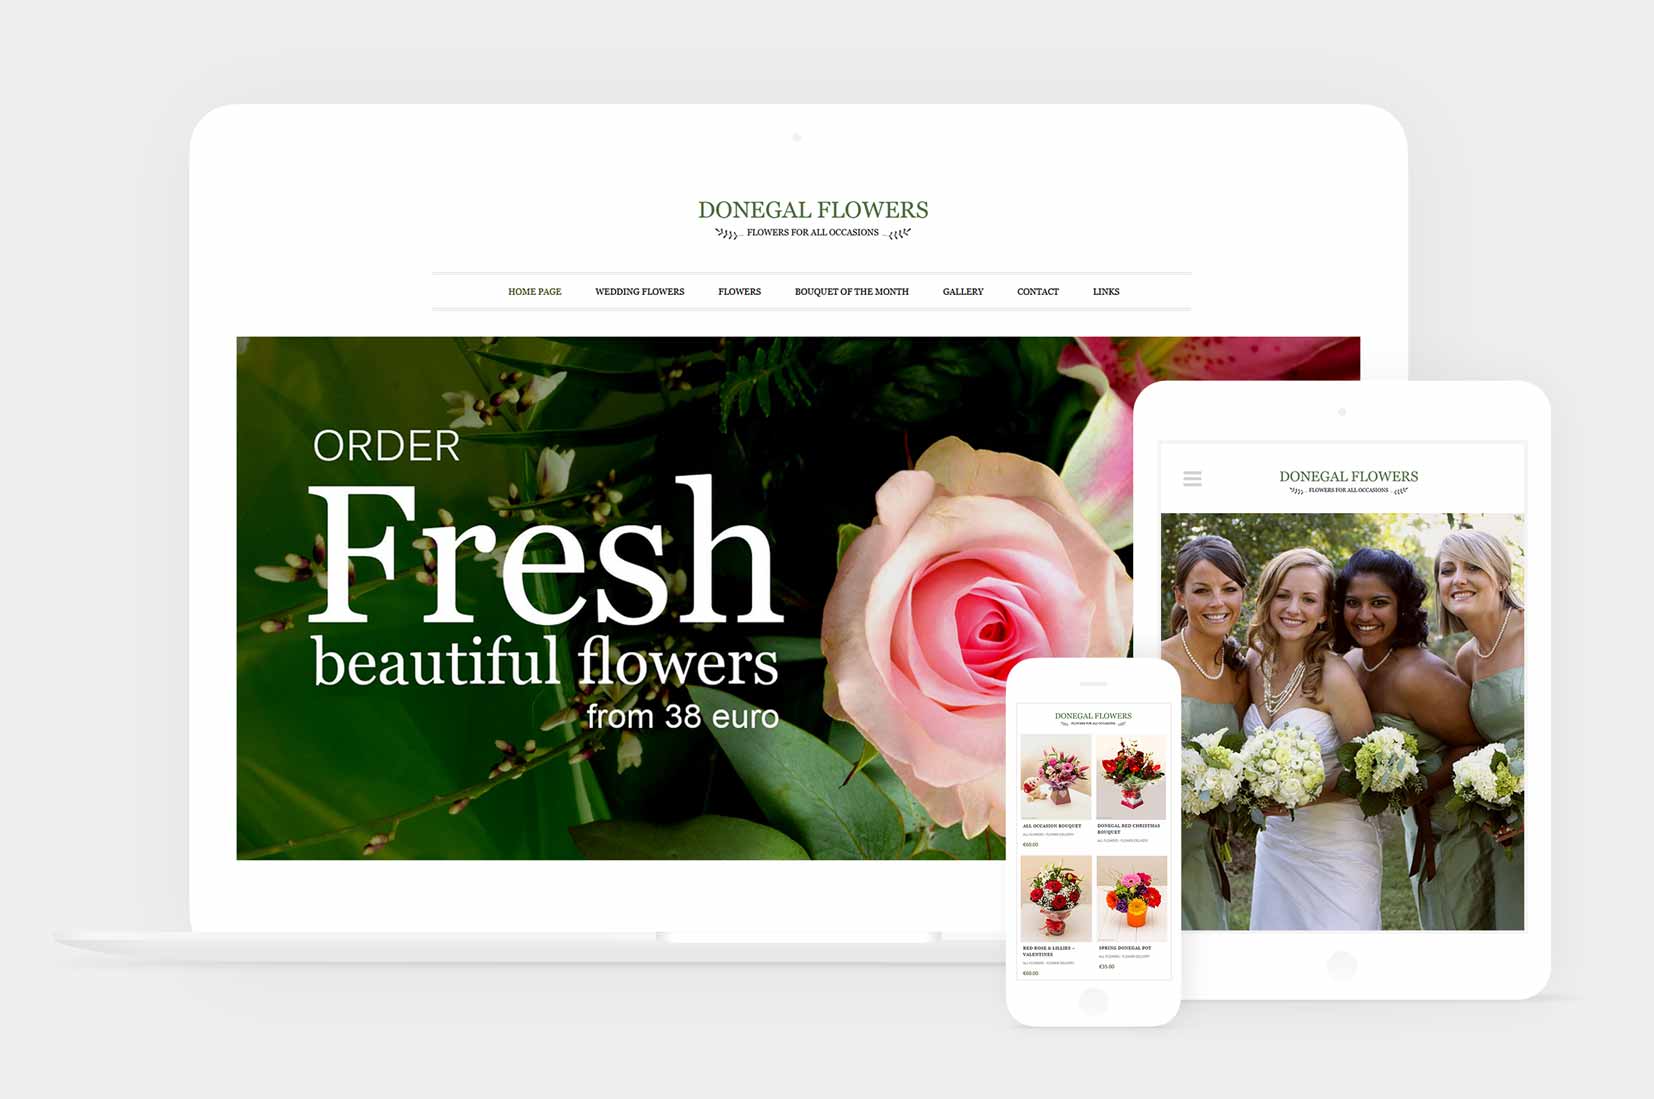 Wordpress website developed for donegal florist geraldine fehily